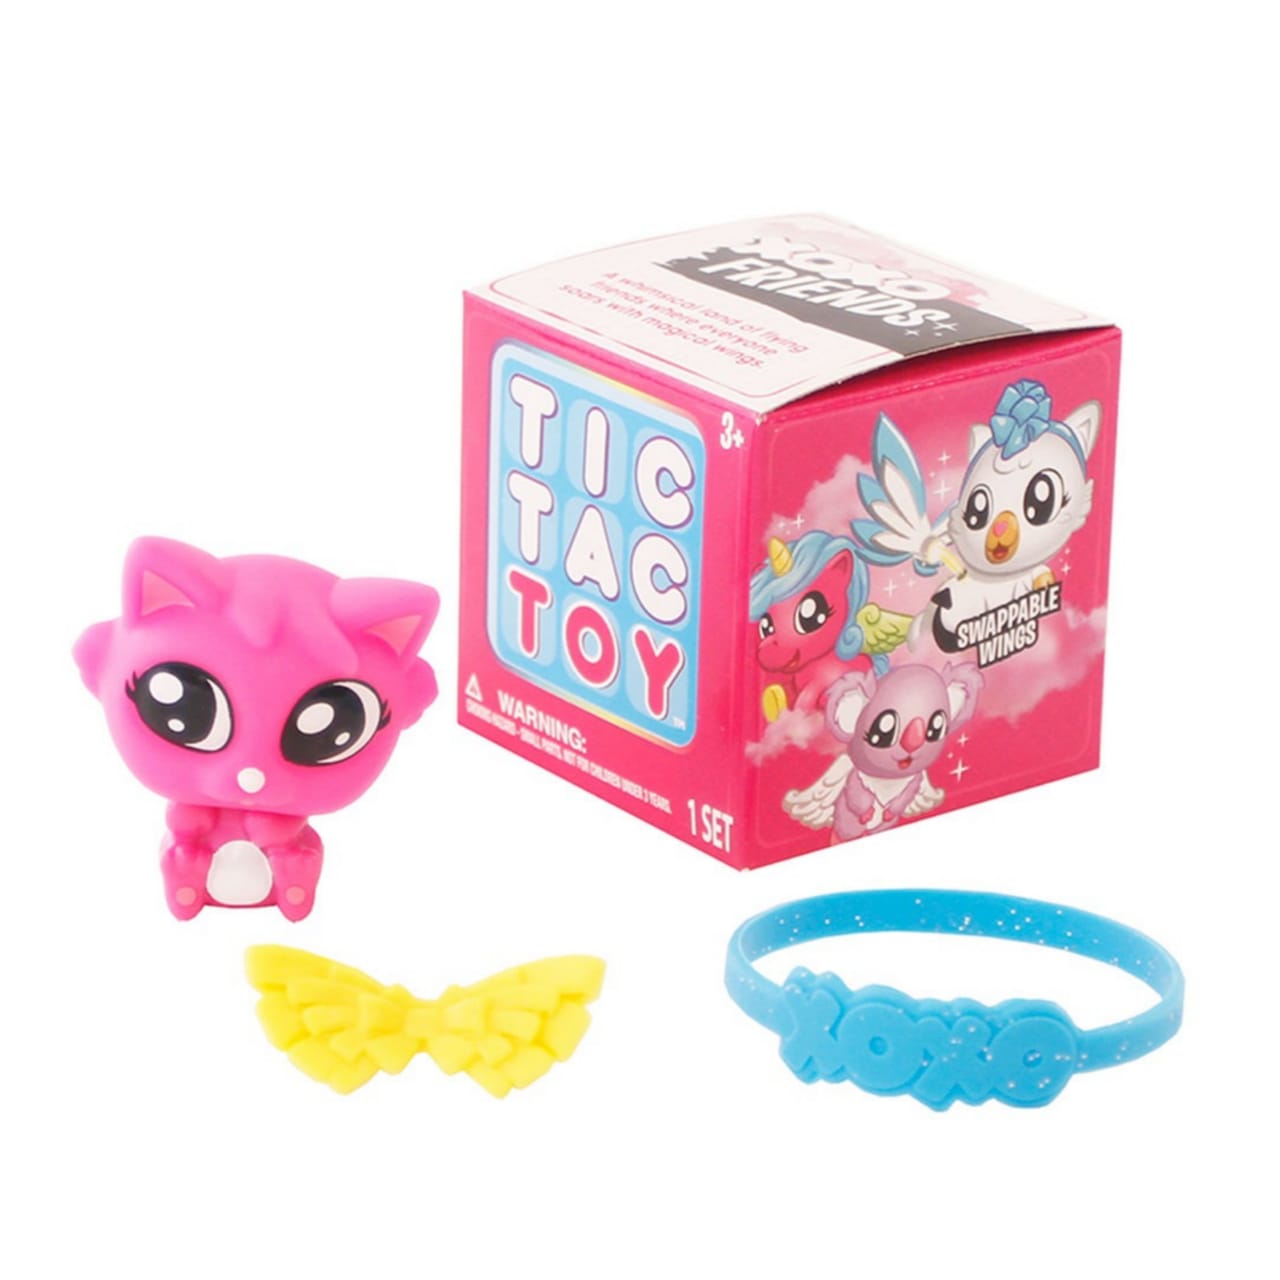 Tic Tac Toy XOXO Light Up Hugs Assortment - Toys 4You Store